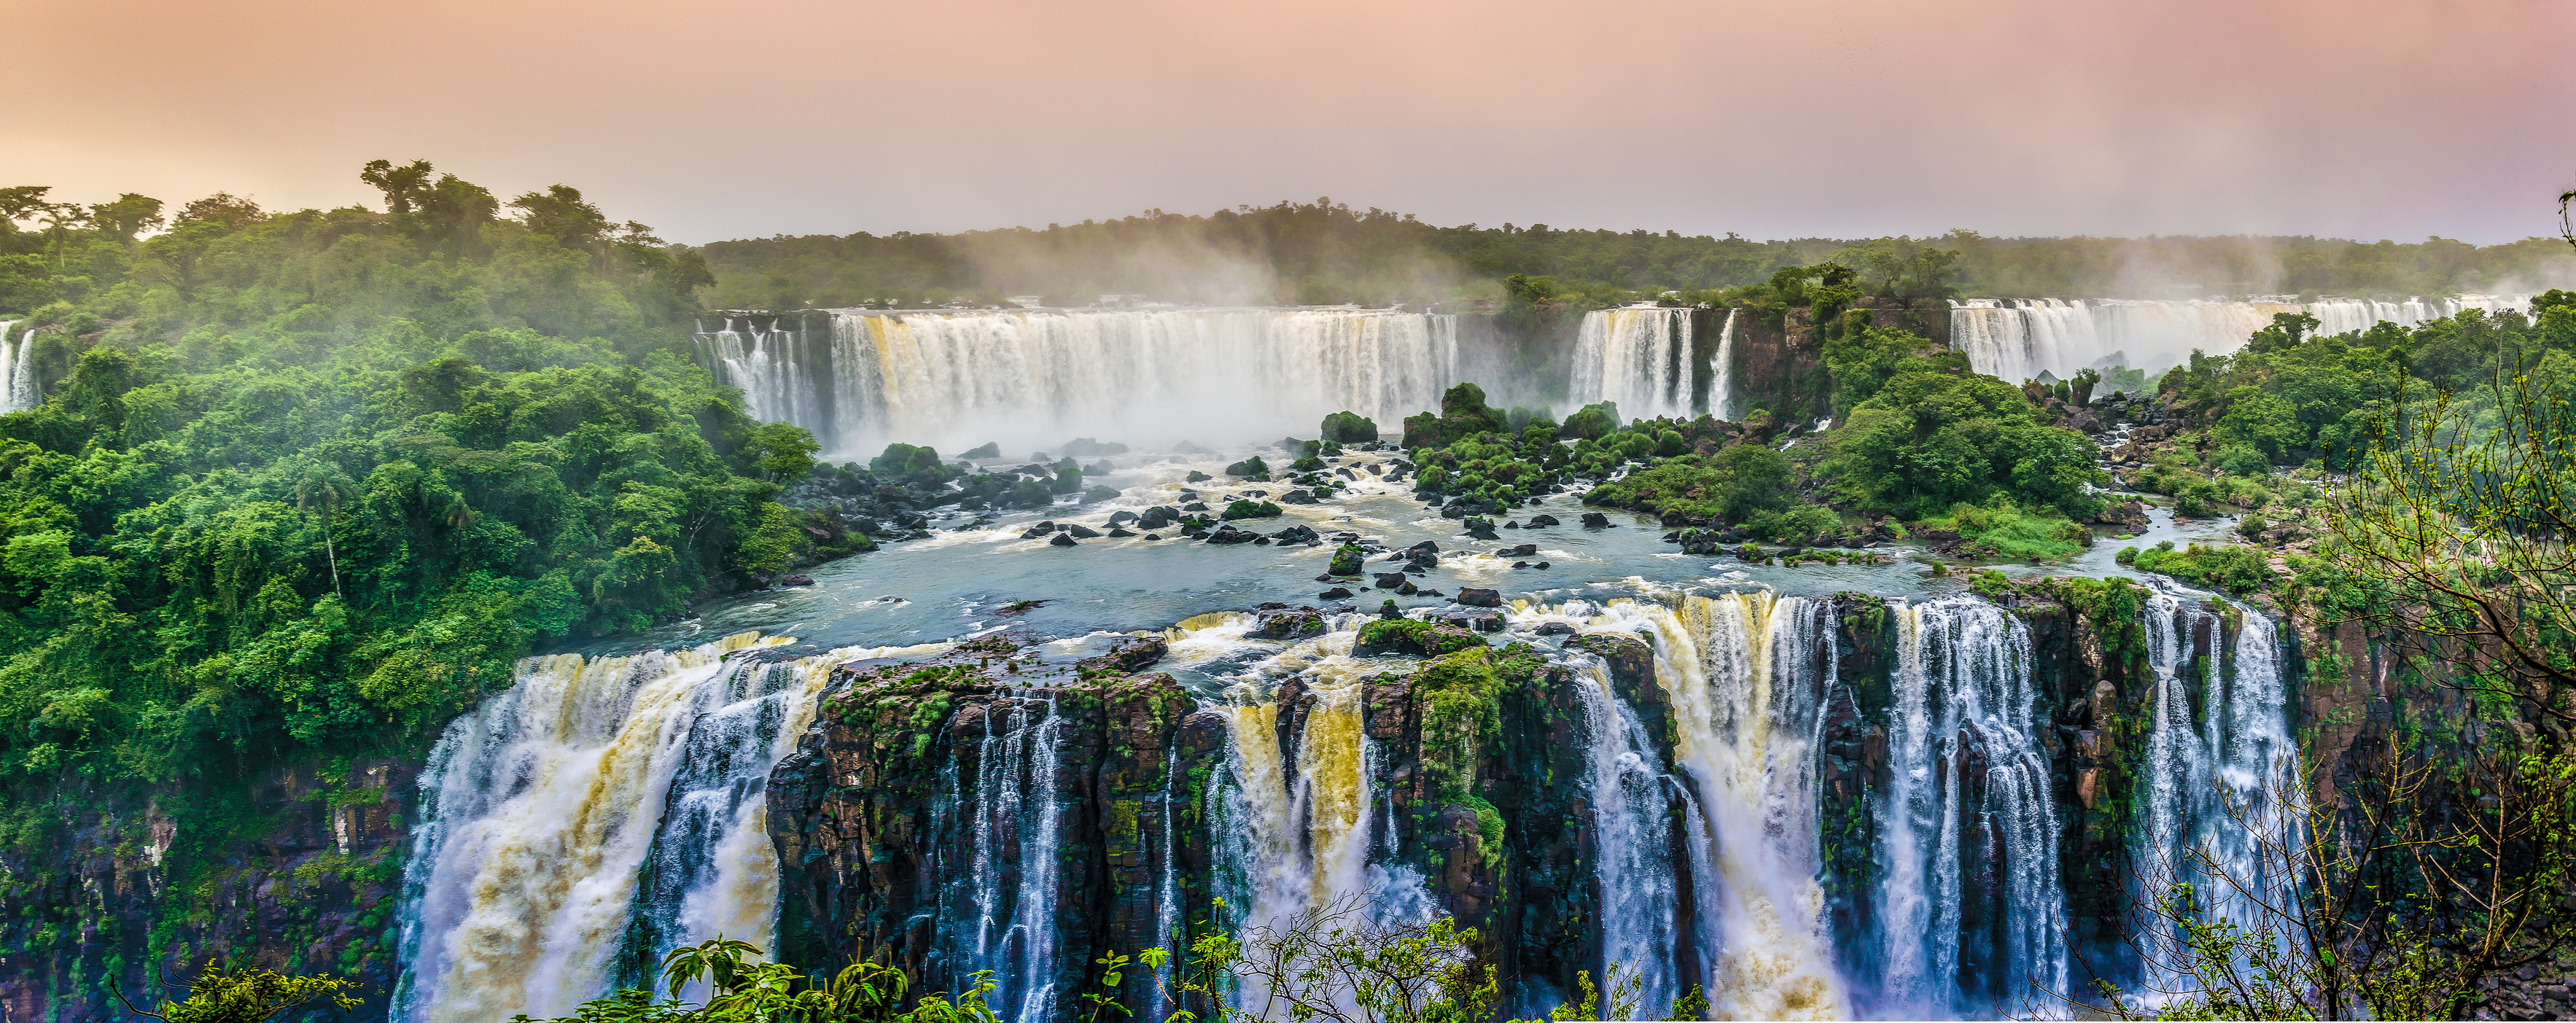 Panorama of a Waterfall Paradise